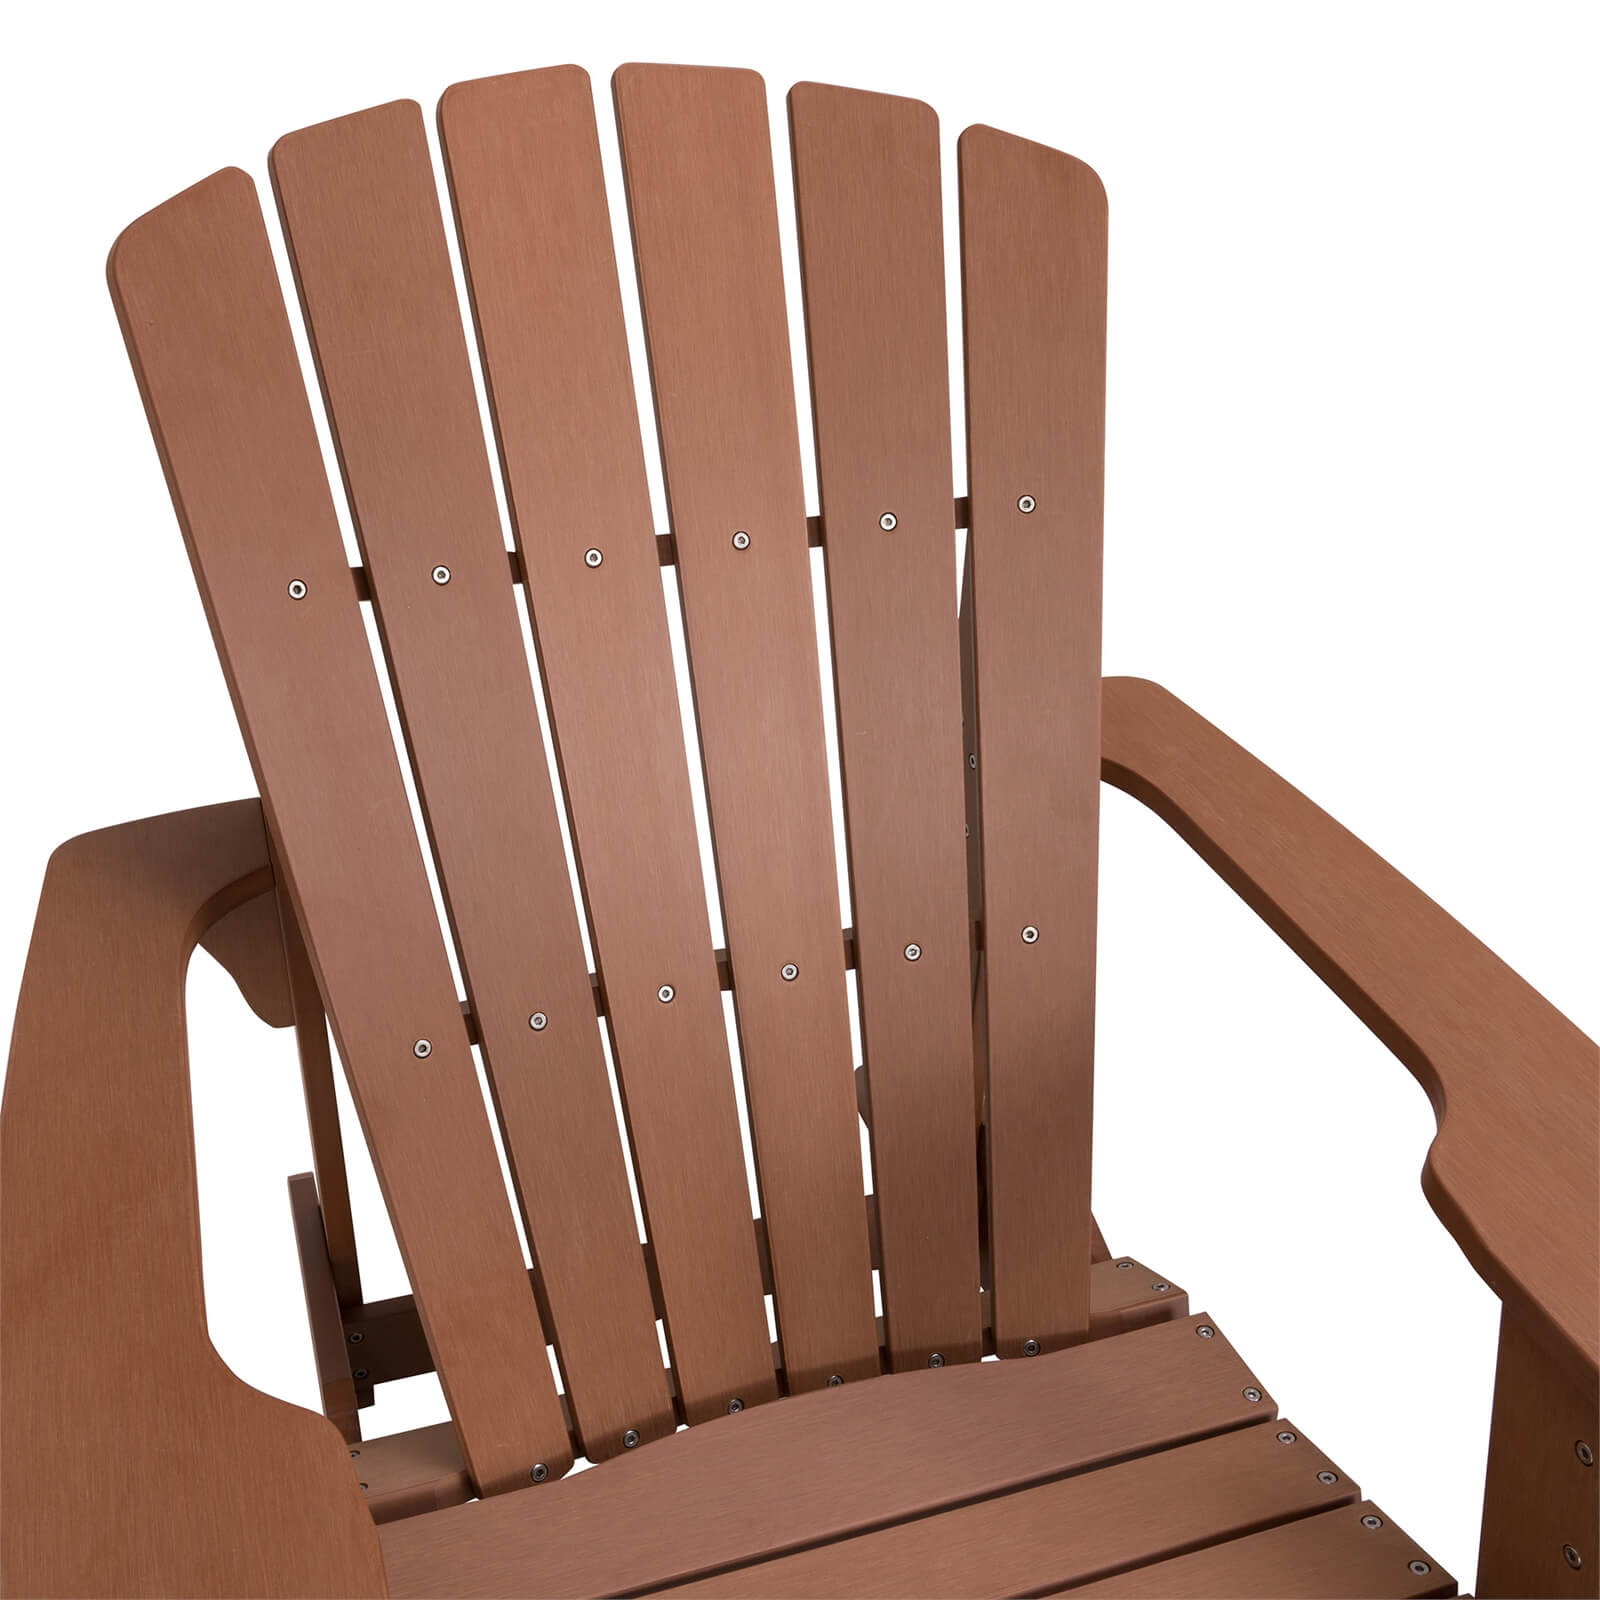 Lifetime Adirondack Chair